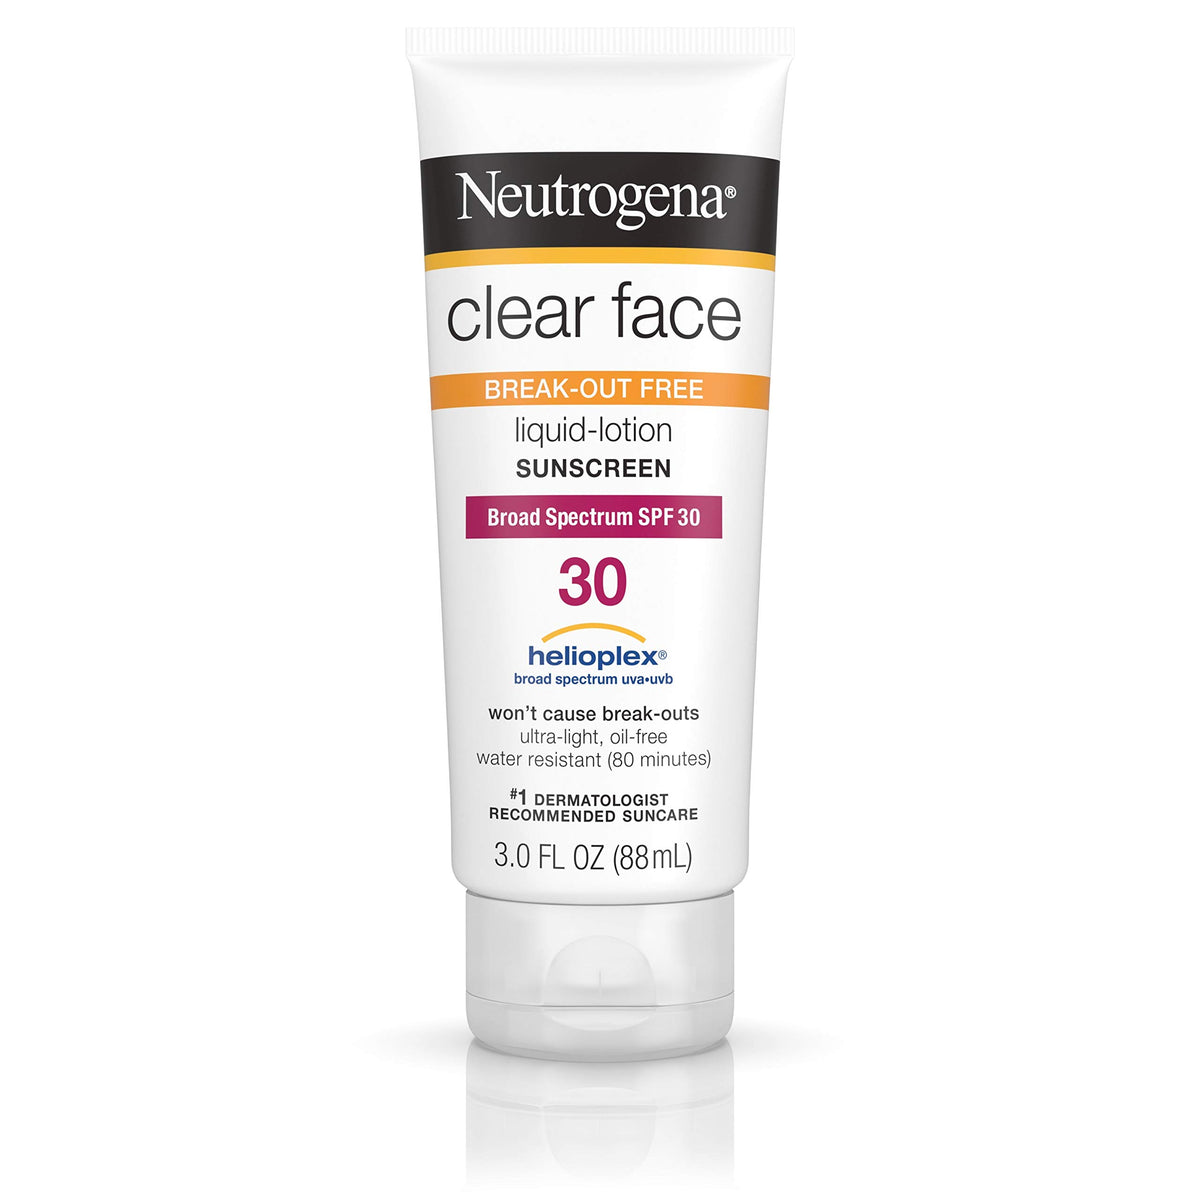 Neutrogena Clear Face Break-Out Free Liquid-Lotion Sunscreen SPF 30 3 oz